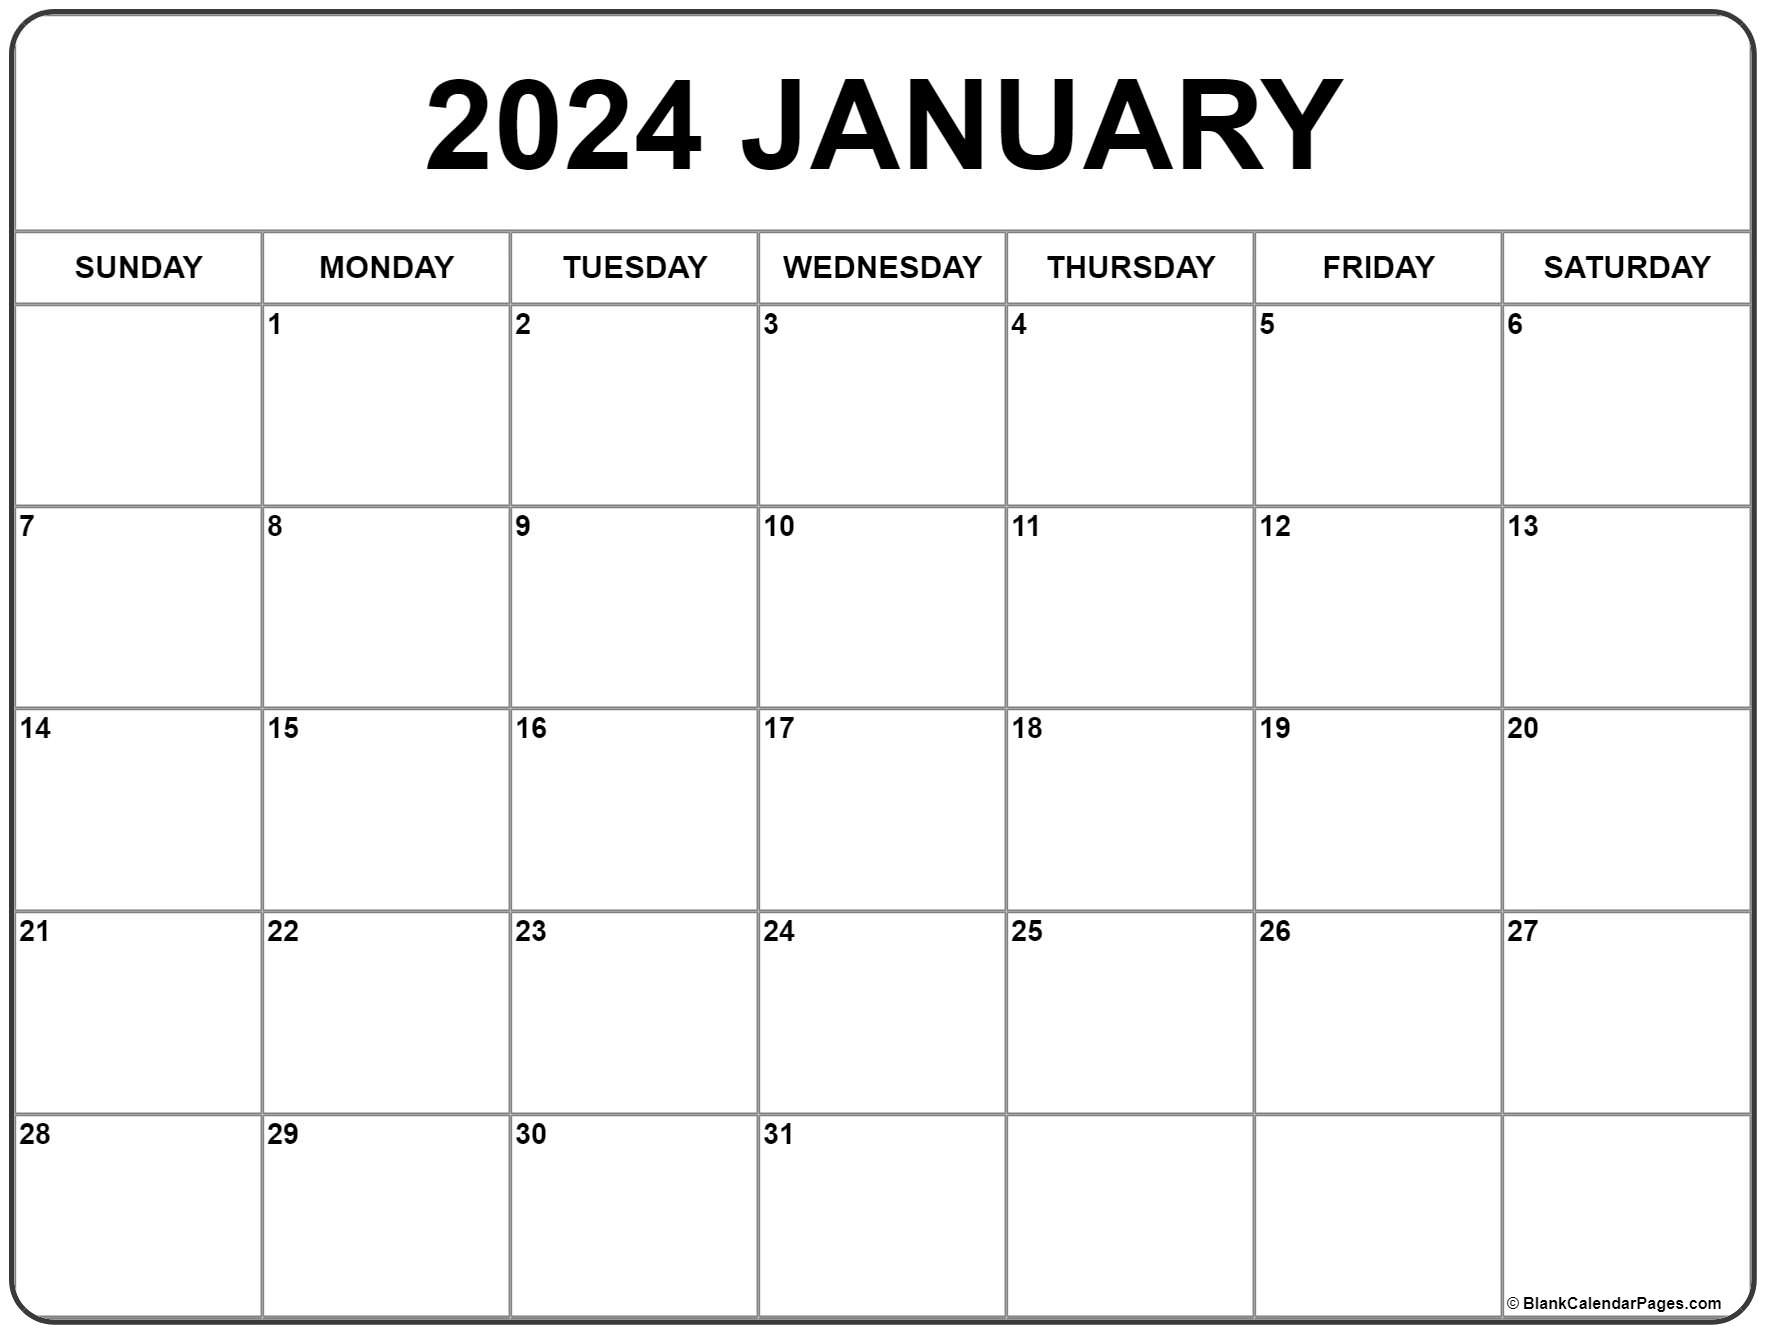 January 2024 Calendar | Free Printable Calendar for Blank January 2024 Calendar Free Printable